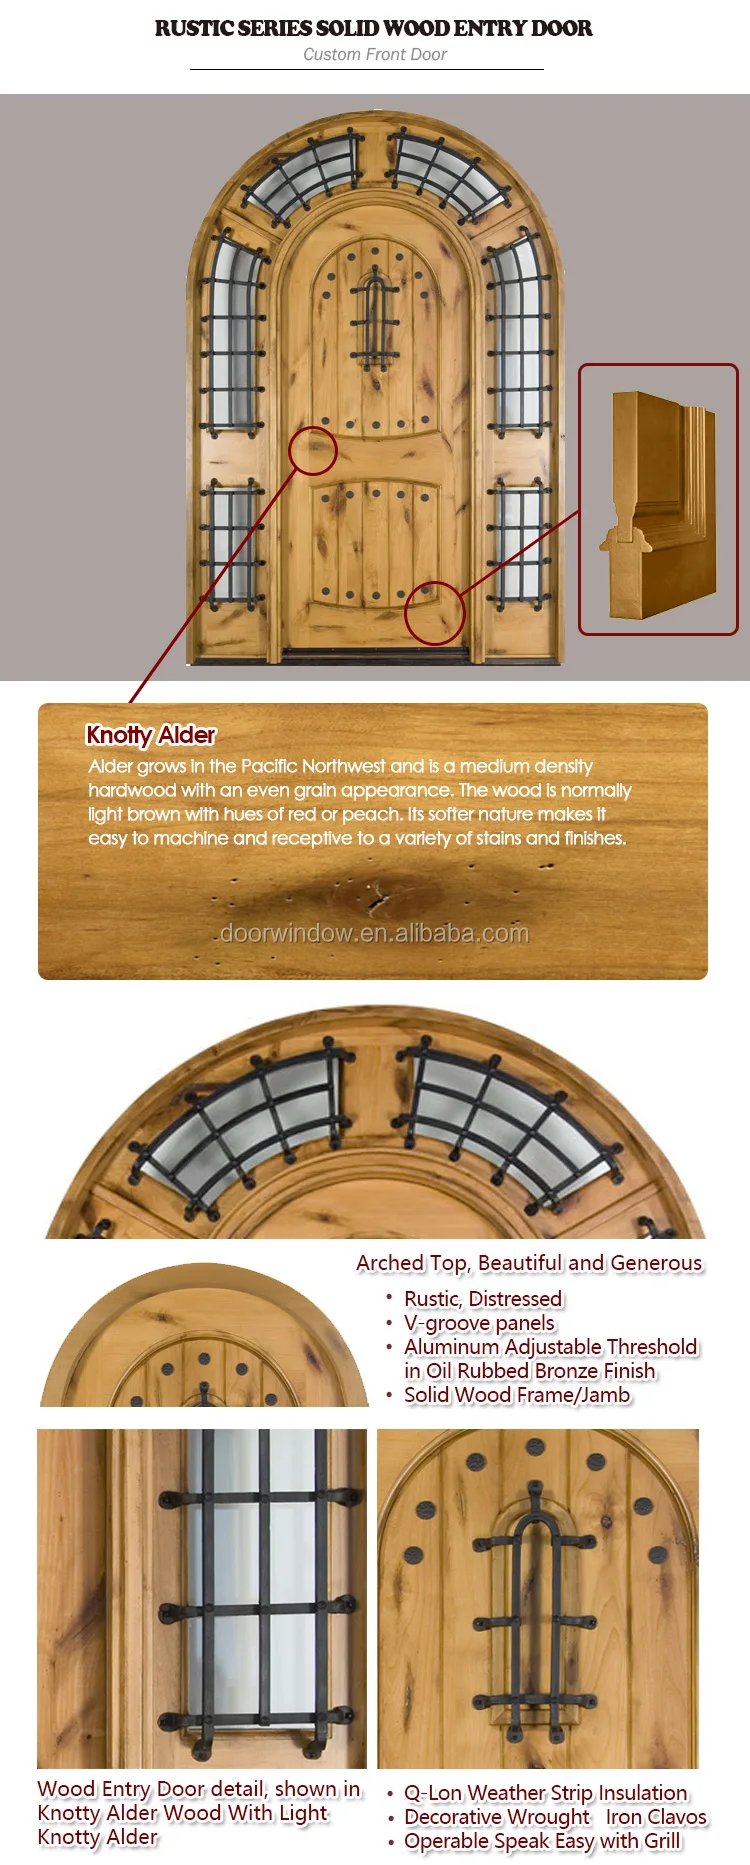 Special shape side lites wooden door for entry